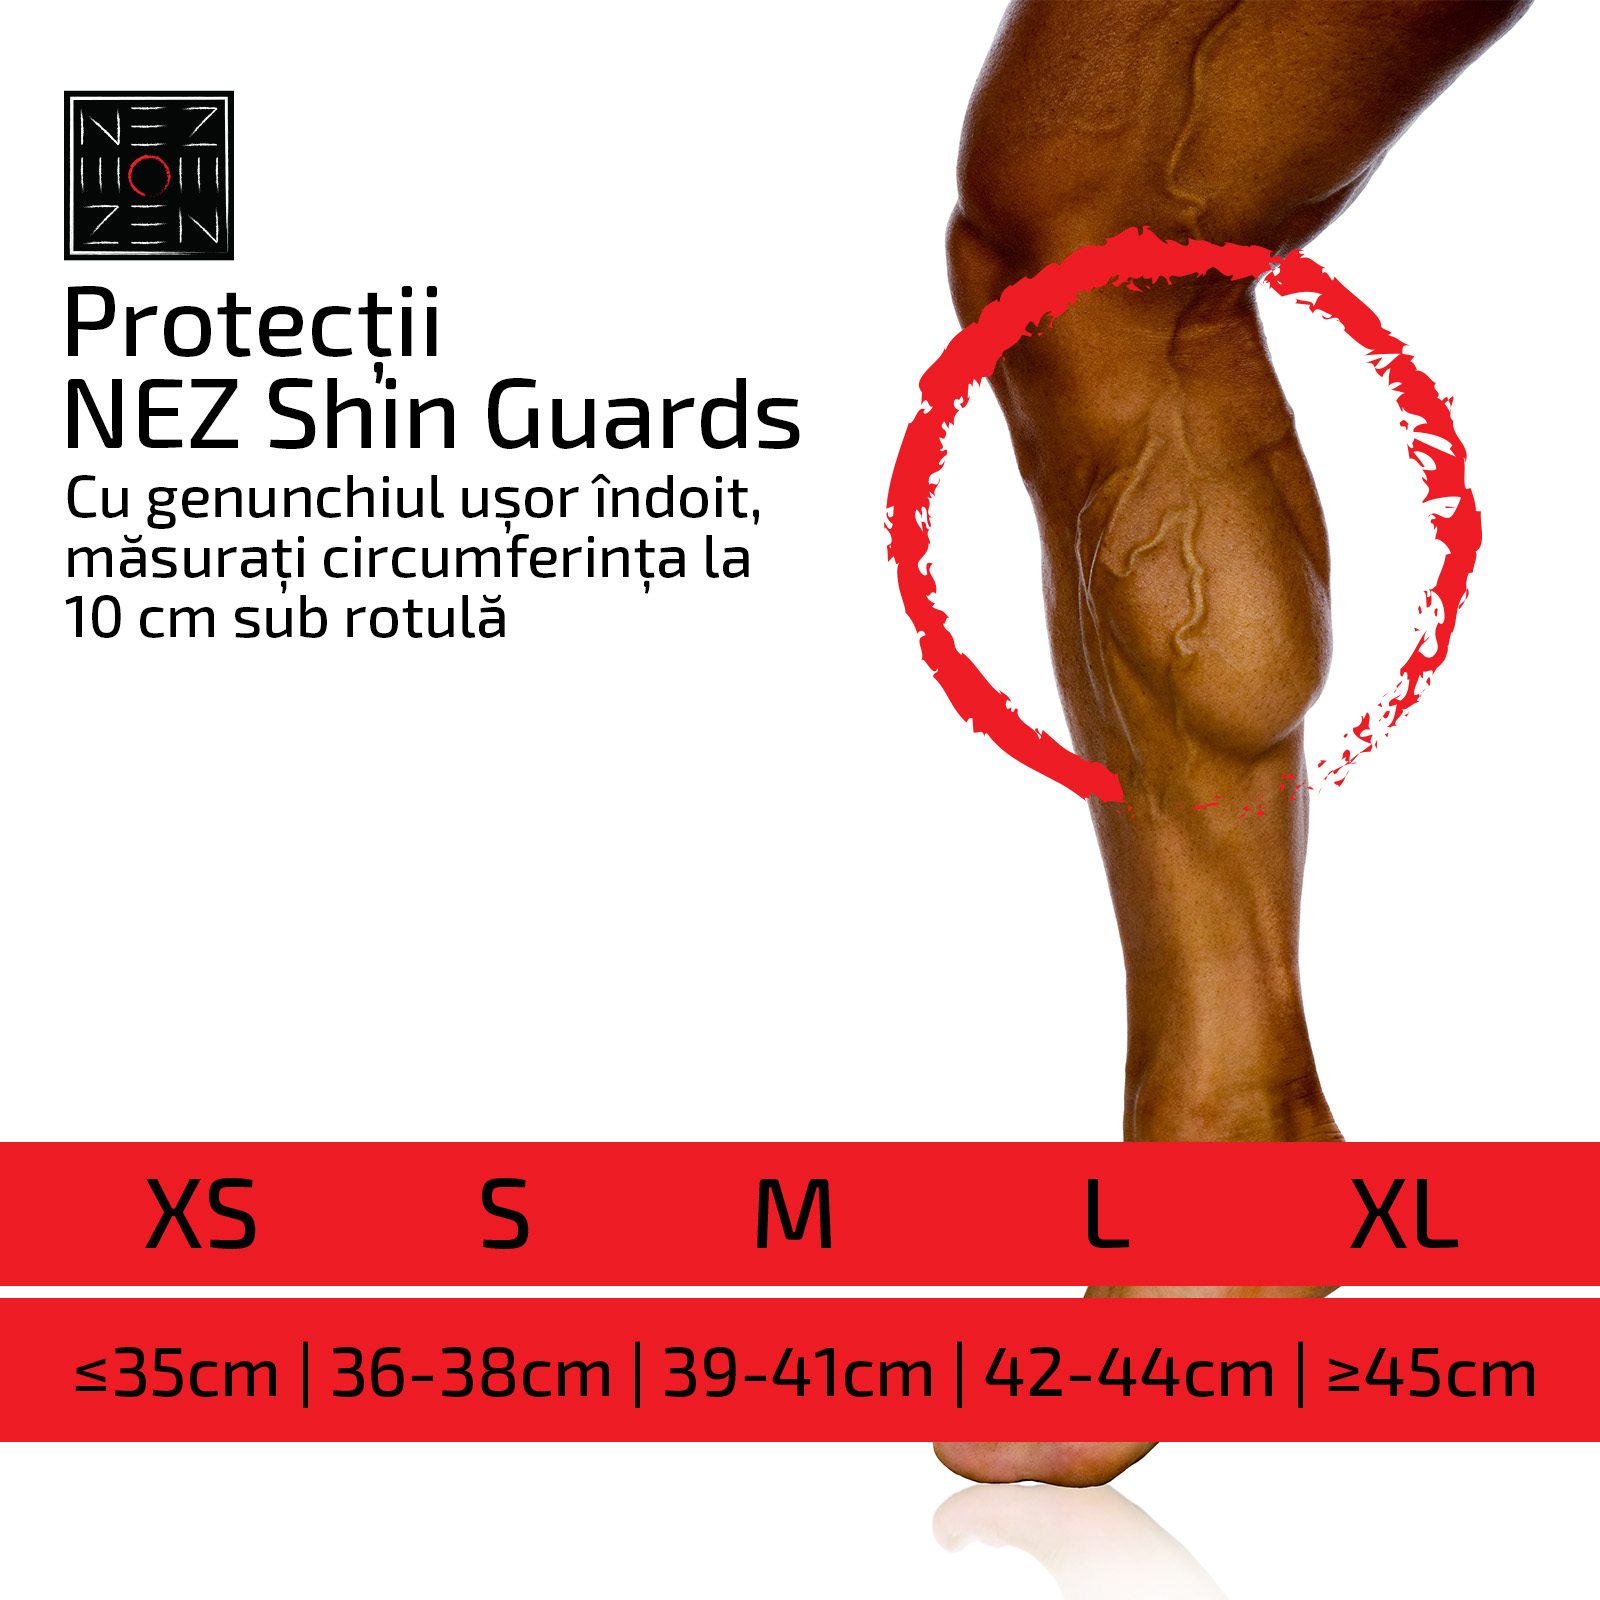 Protectii NEZ Shin Guards